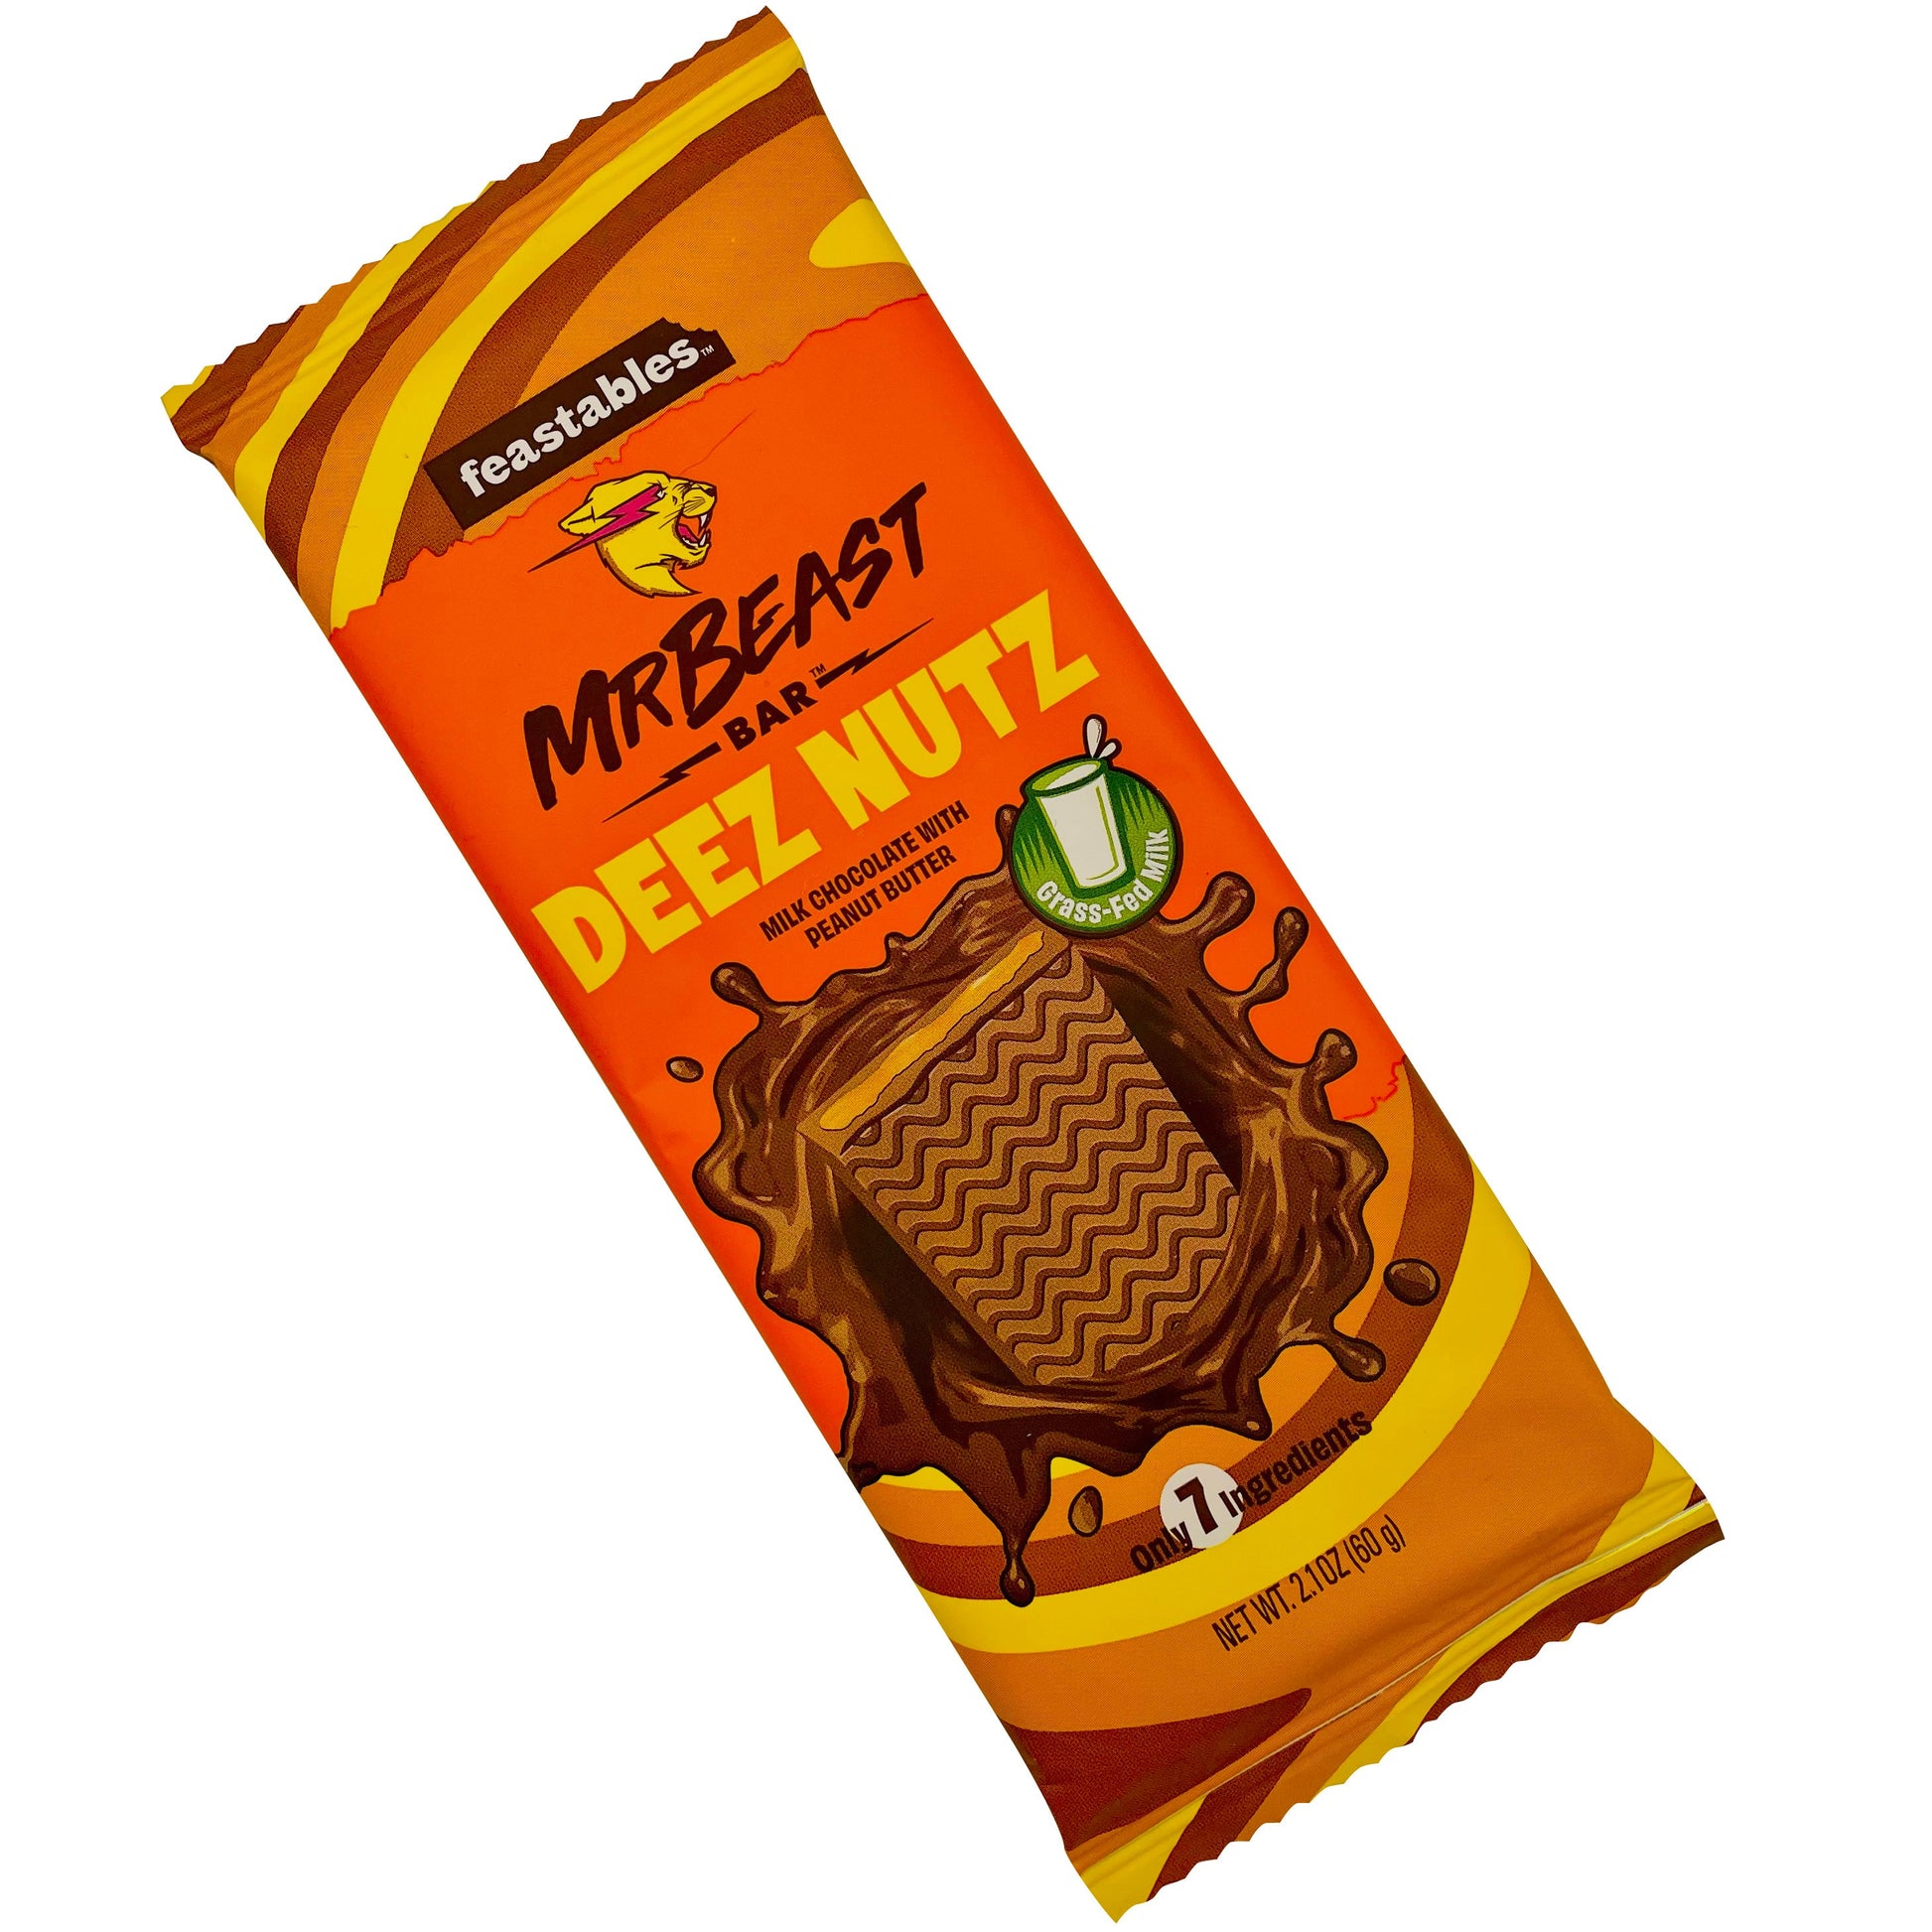  Feastables Beast Chocolate Bars – NEW Deez Nuts Peanut